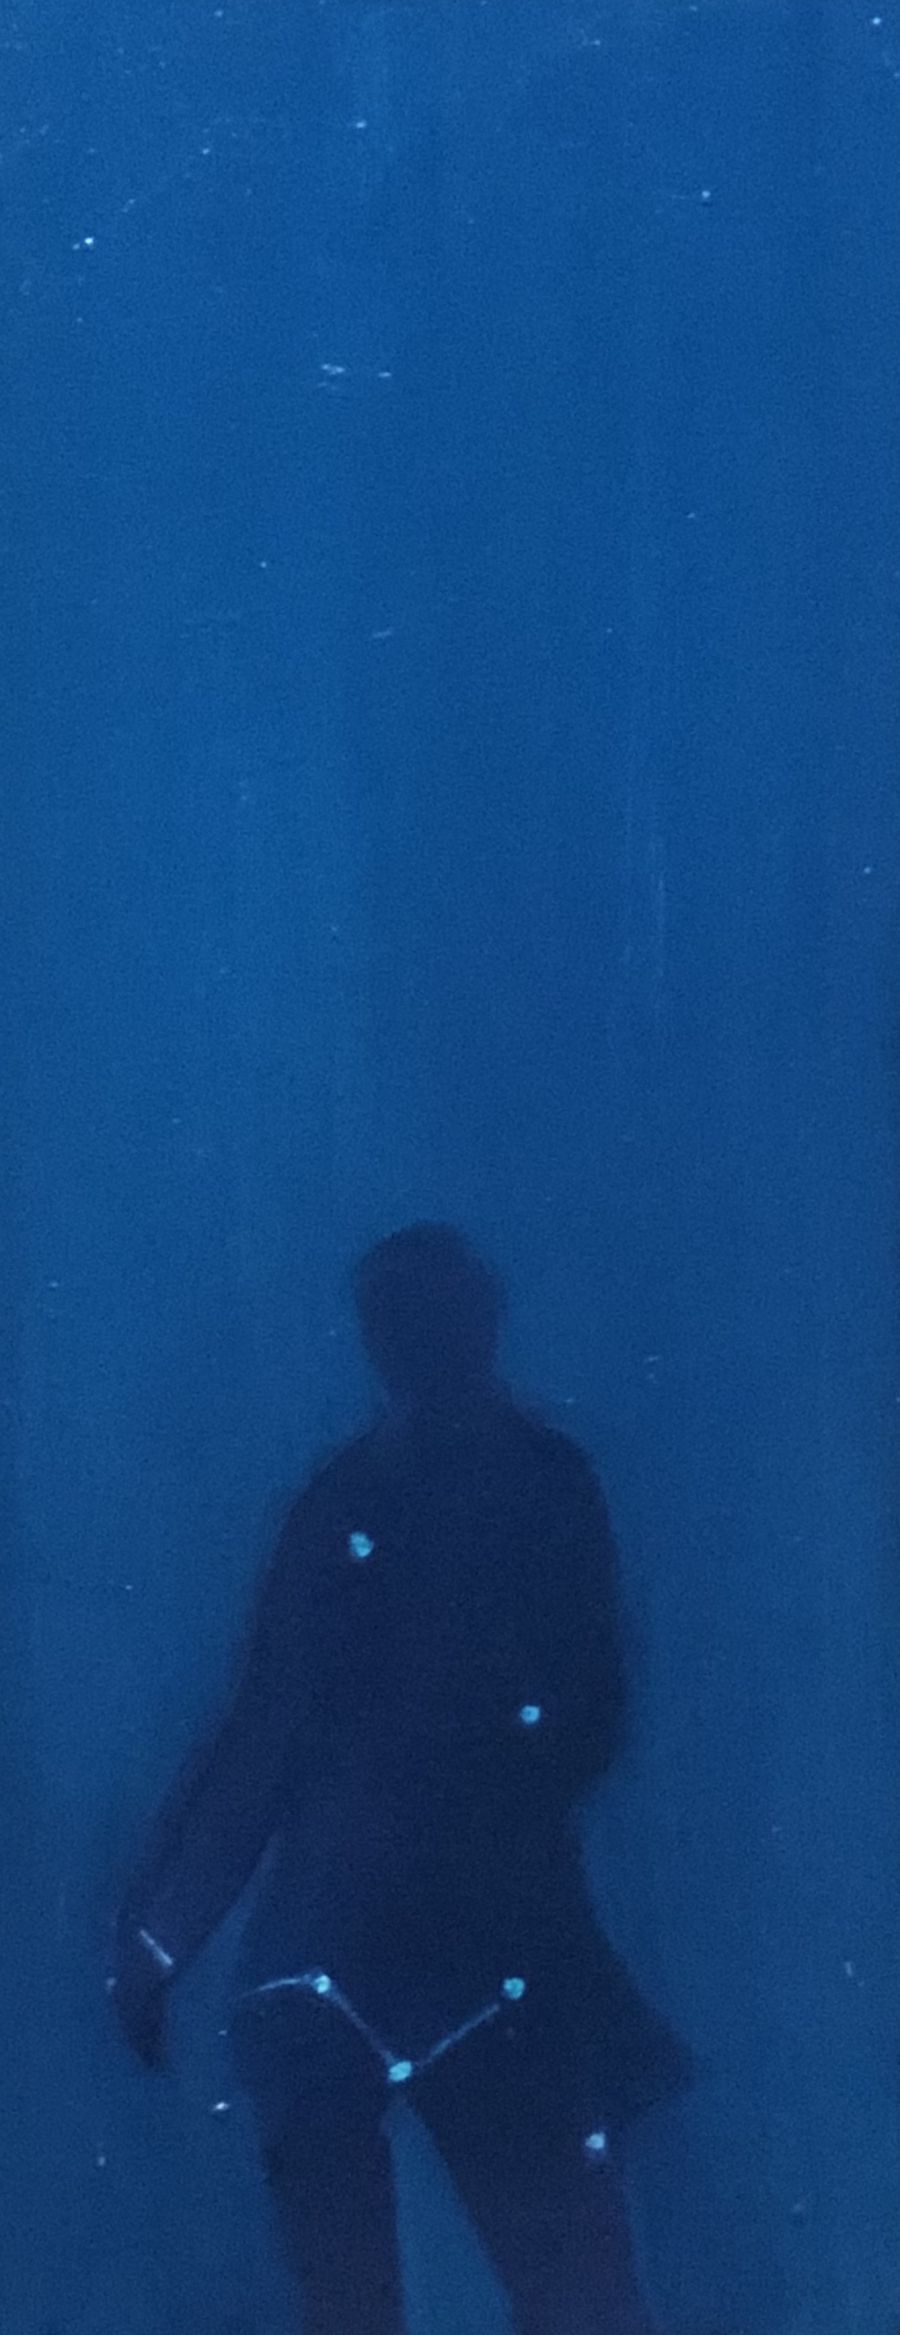 Silhouette of a blue figure..